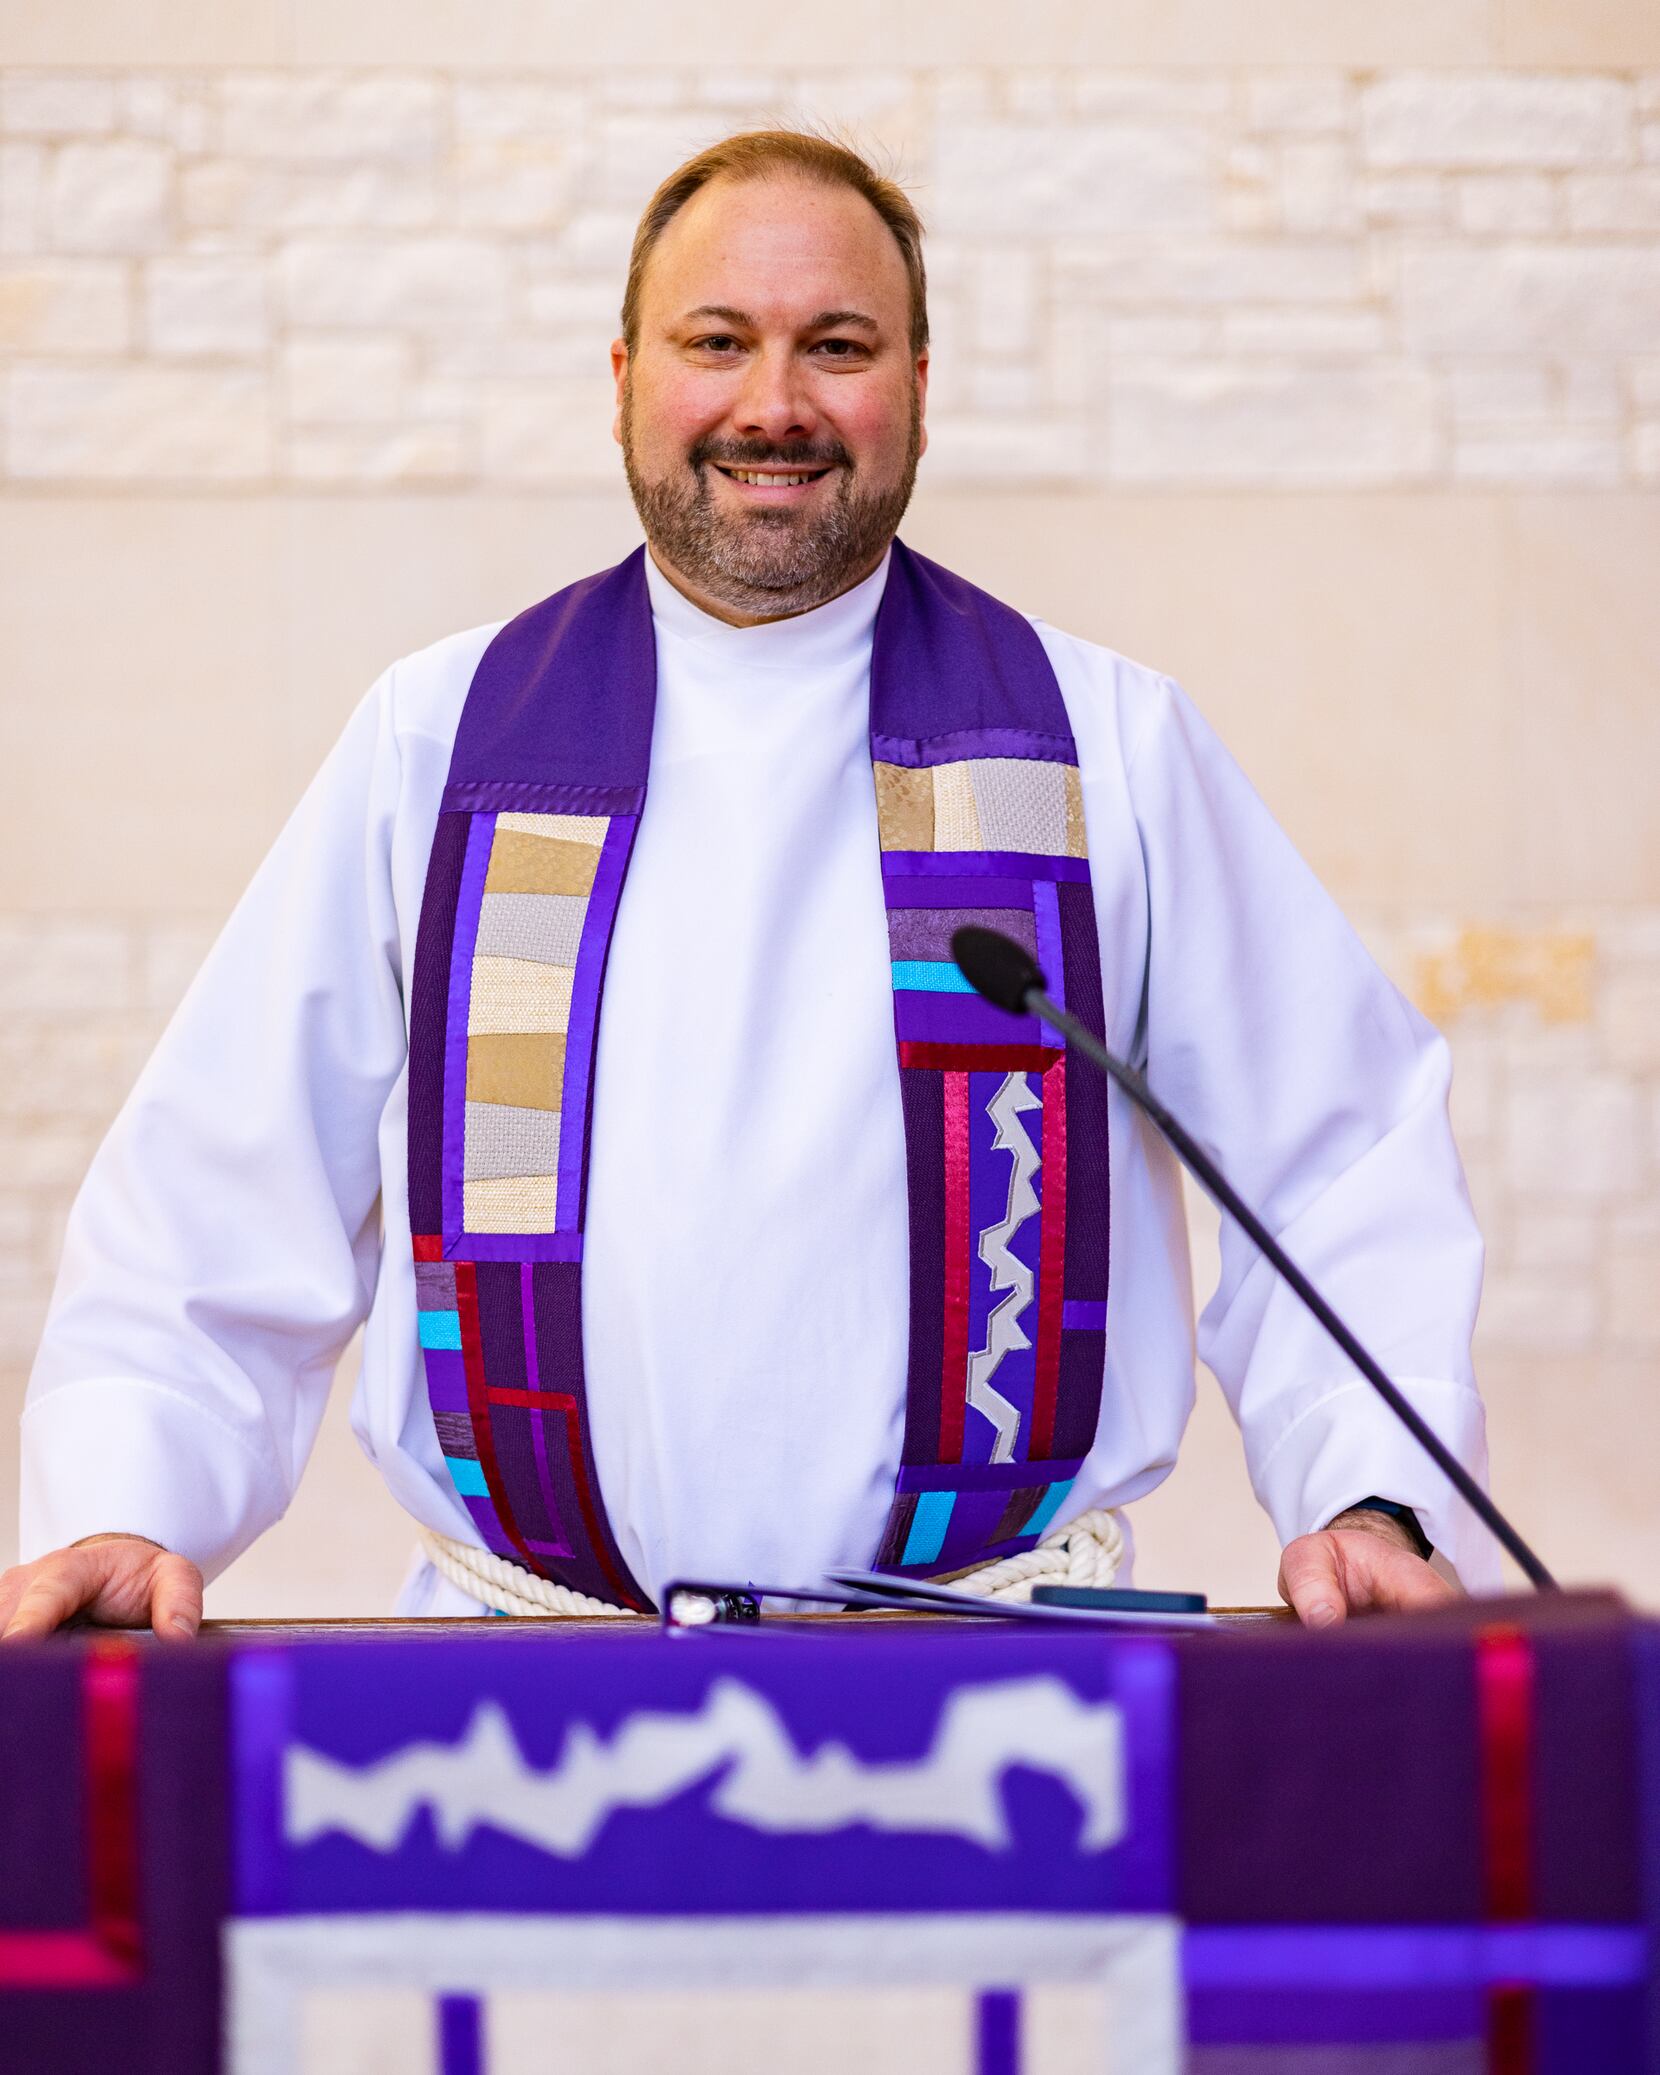 Pastor Paul Mussachio from Preston Meadow Lutheran Church in Dallas